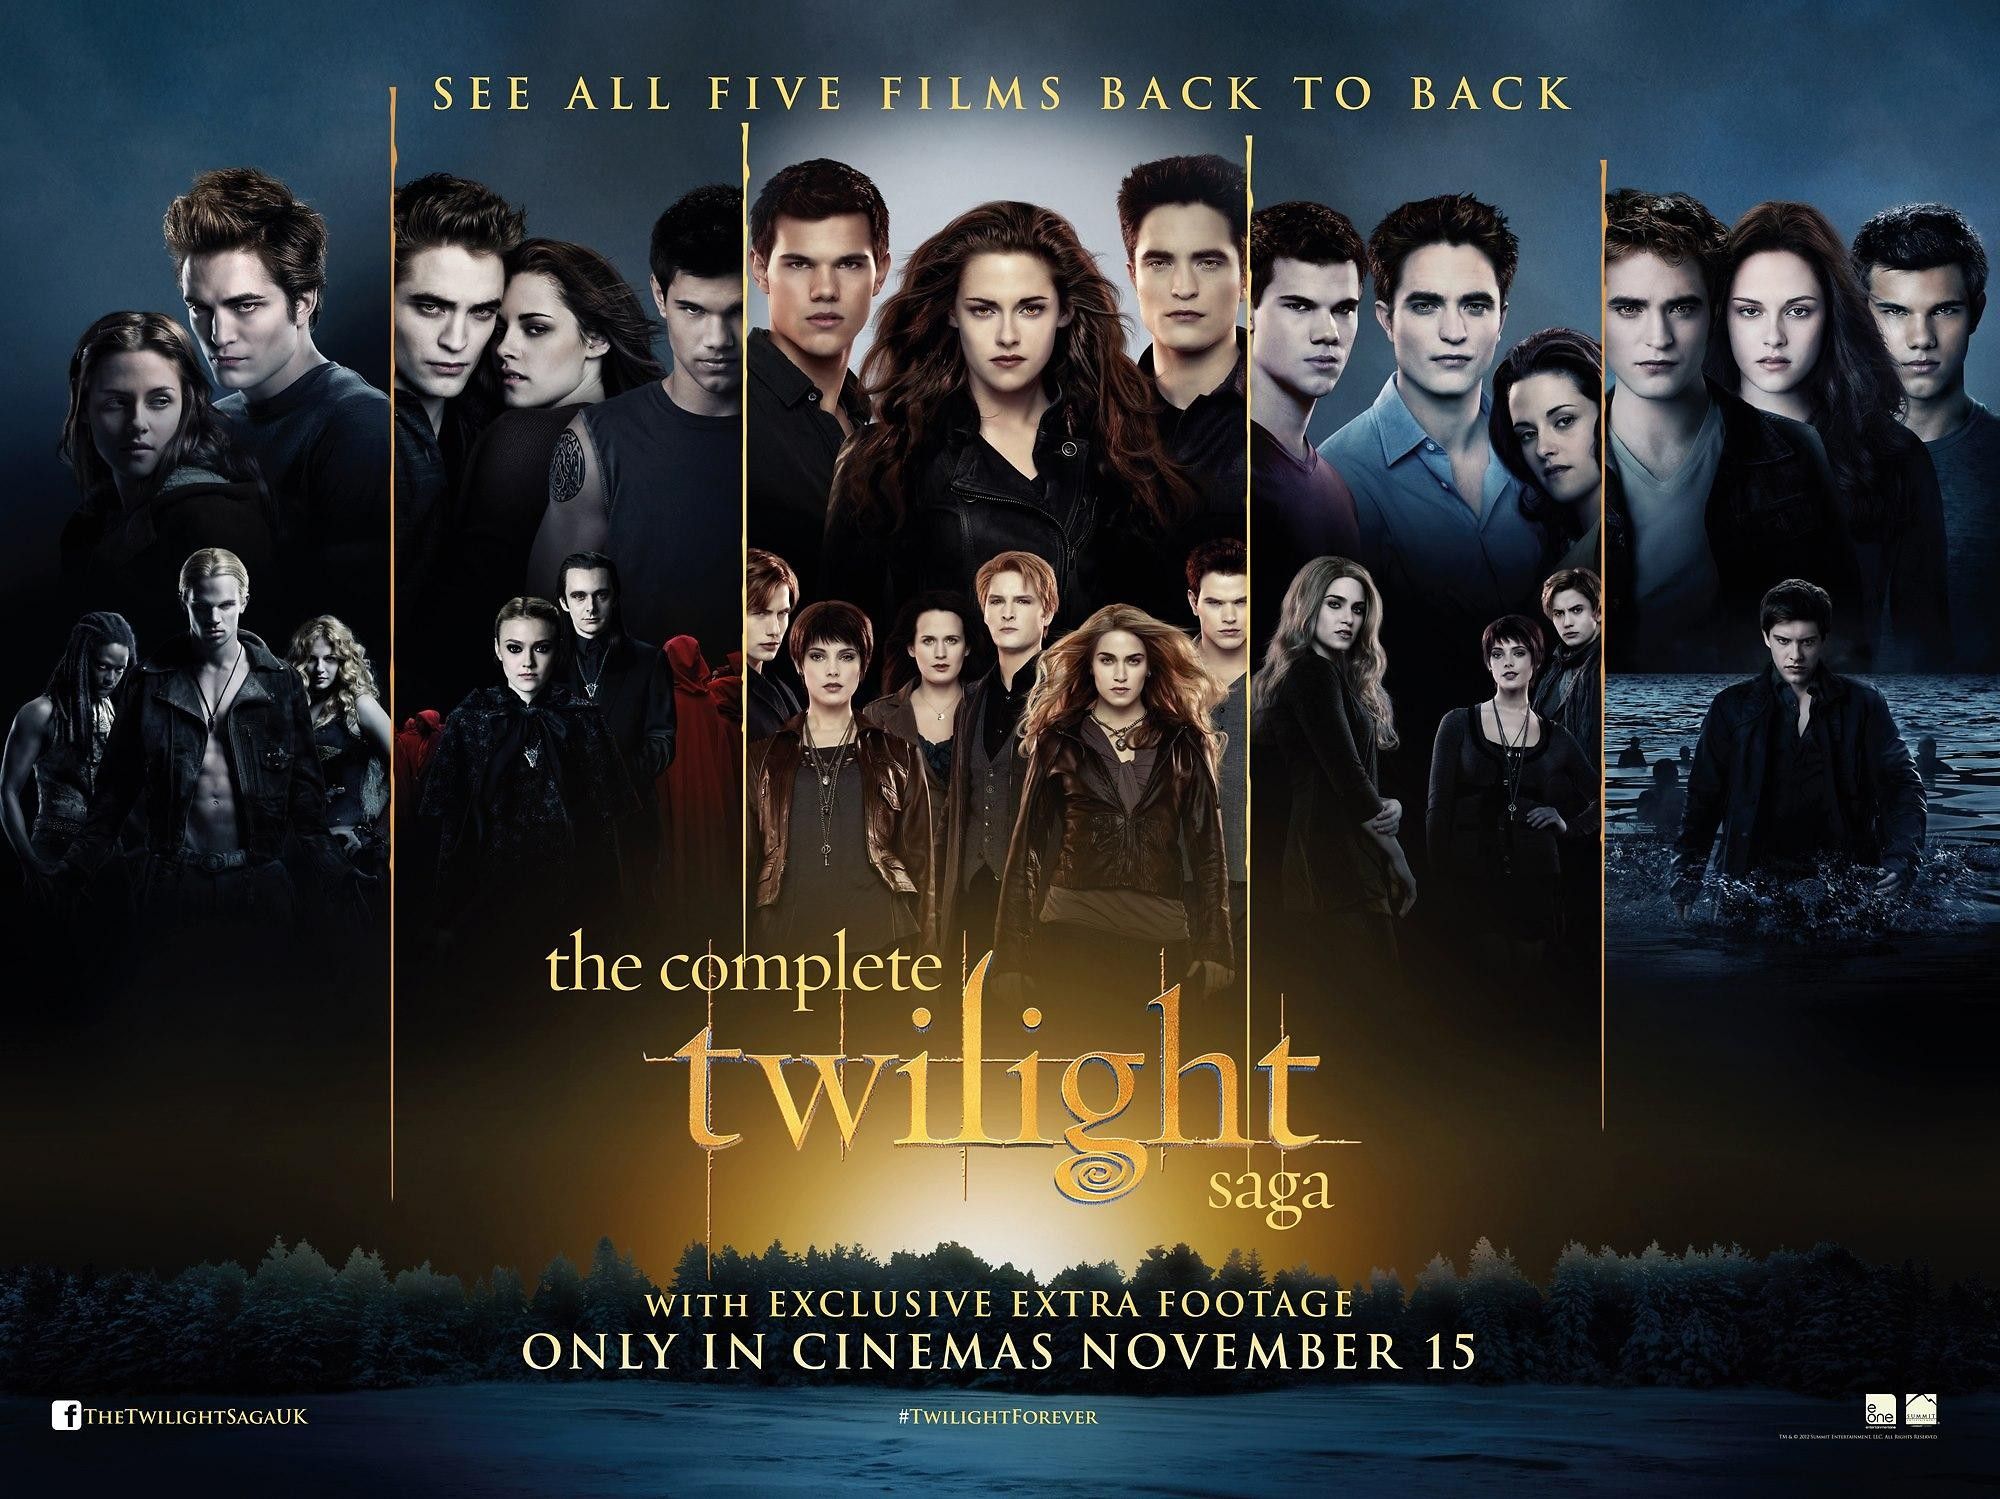 The Complete Twilight Saga Poster